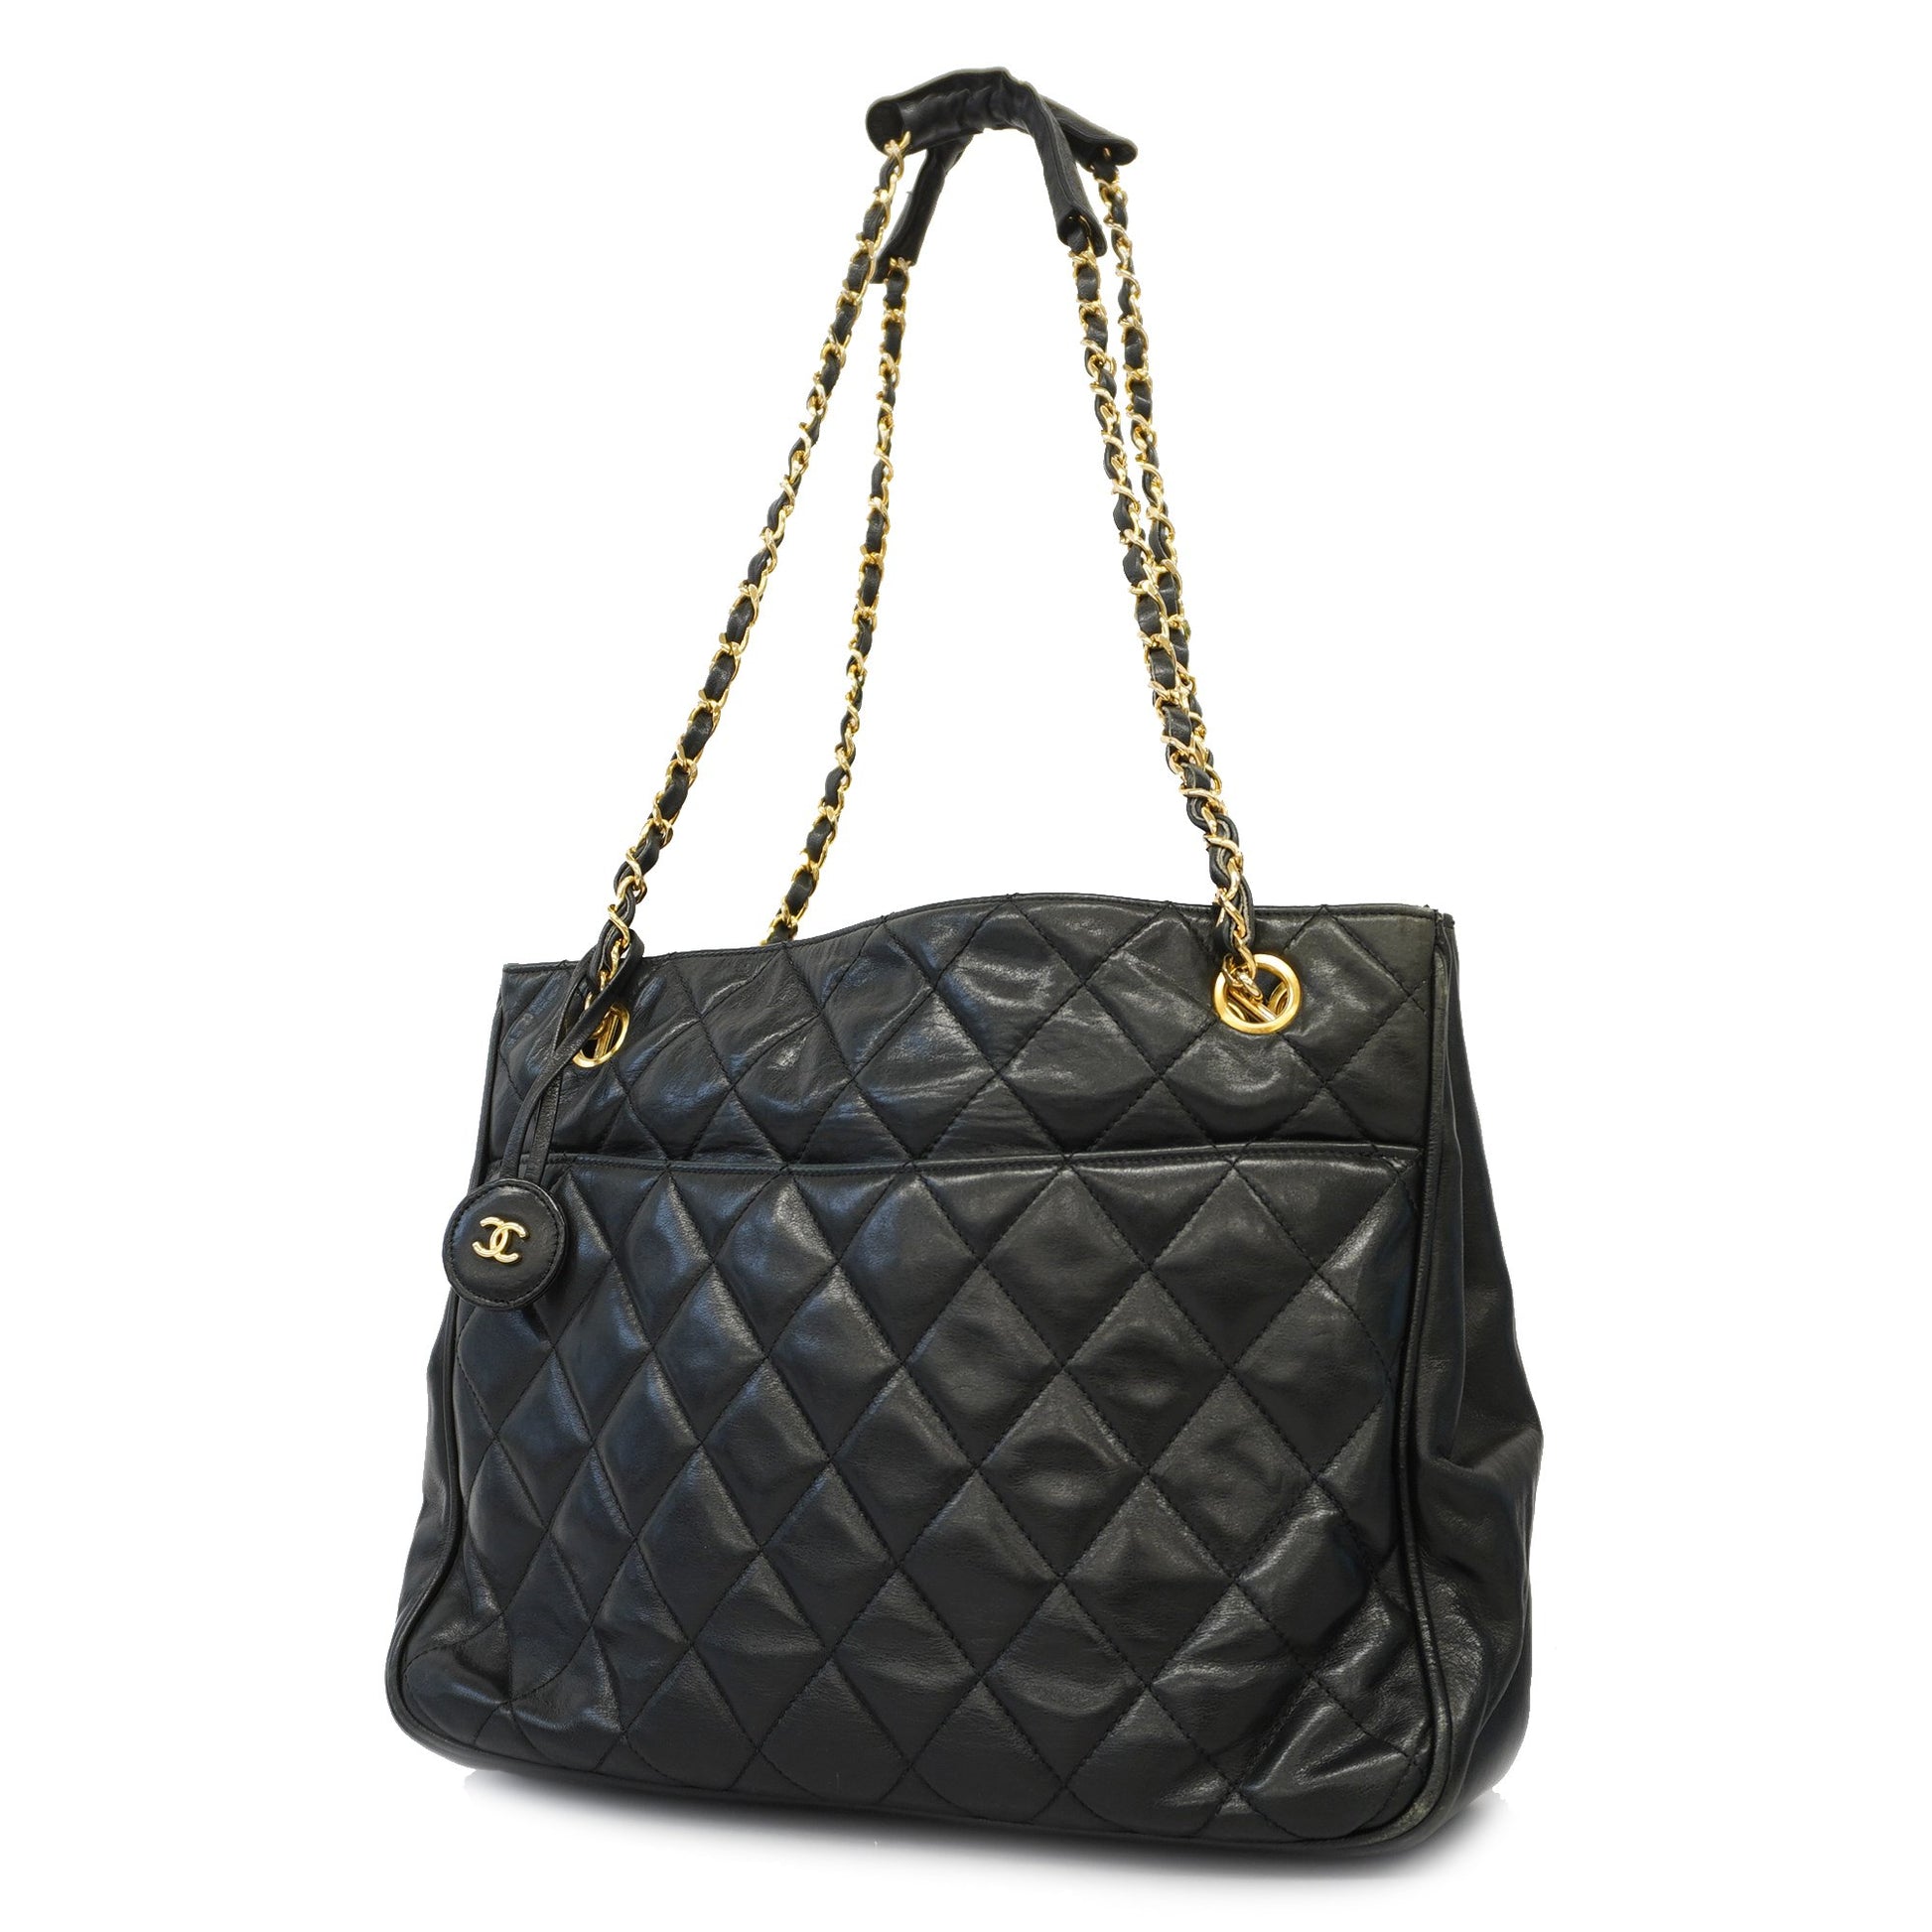 Handbags Chanel Chanel Chain Shoulder Bag Clutch Black Quilted Flap Lambskin Purse